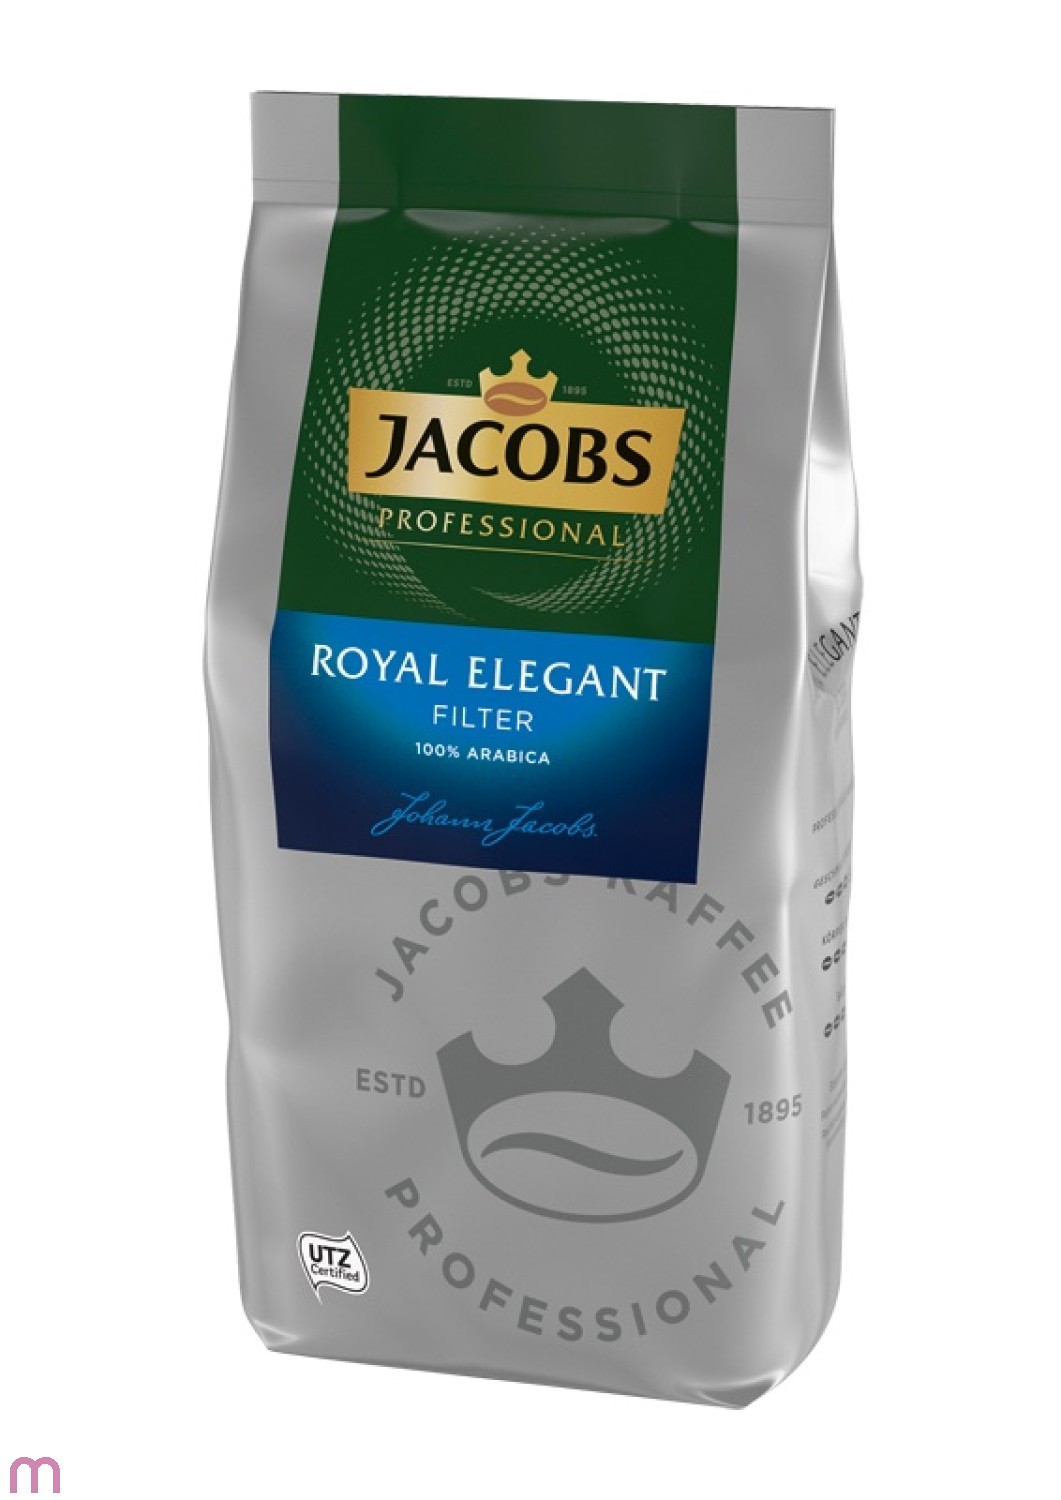 Jacobs Royal Elegant Filterkaffee 1 kg Filterkaffee, UTZ zertifiziert